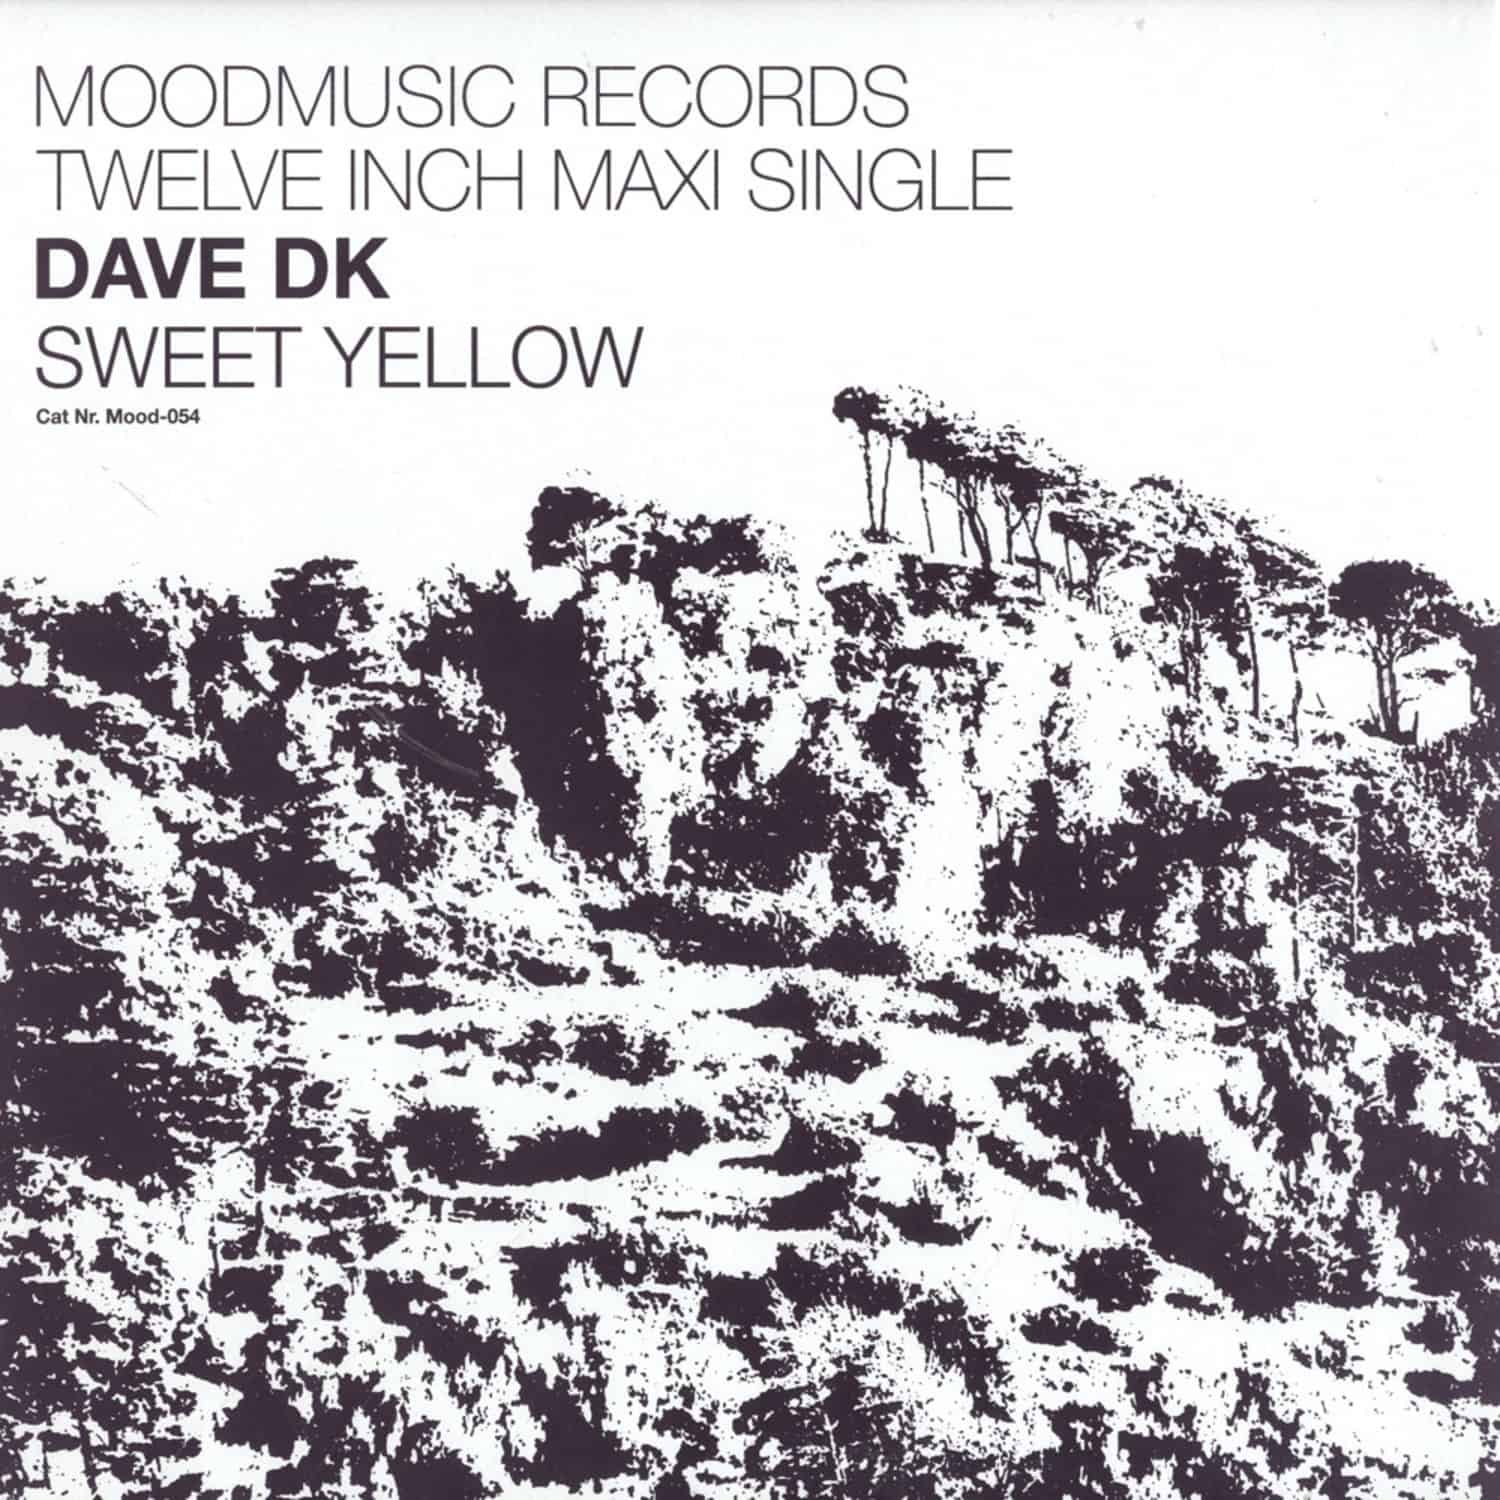 Dave DK - SWEET YELLOW